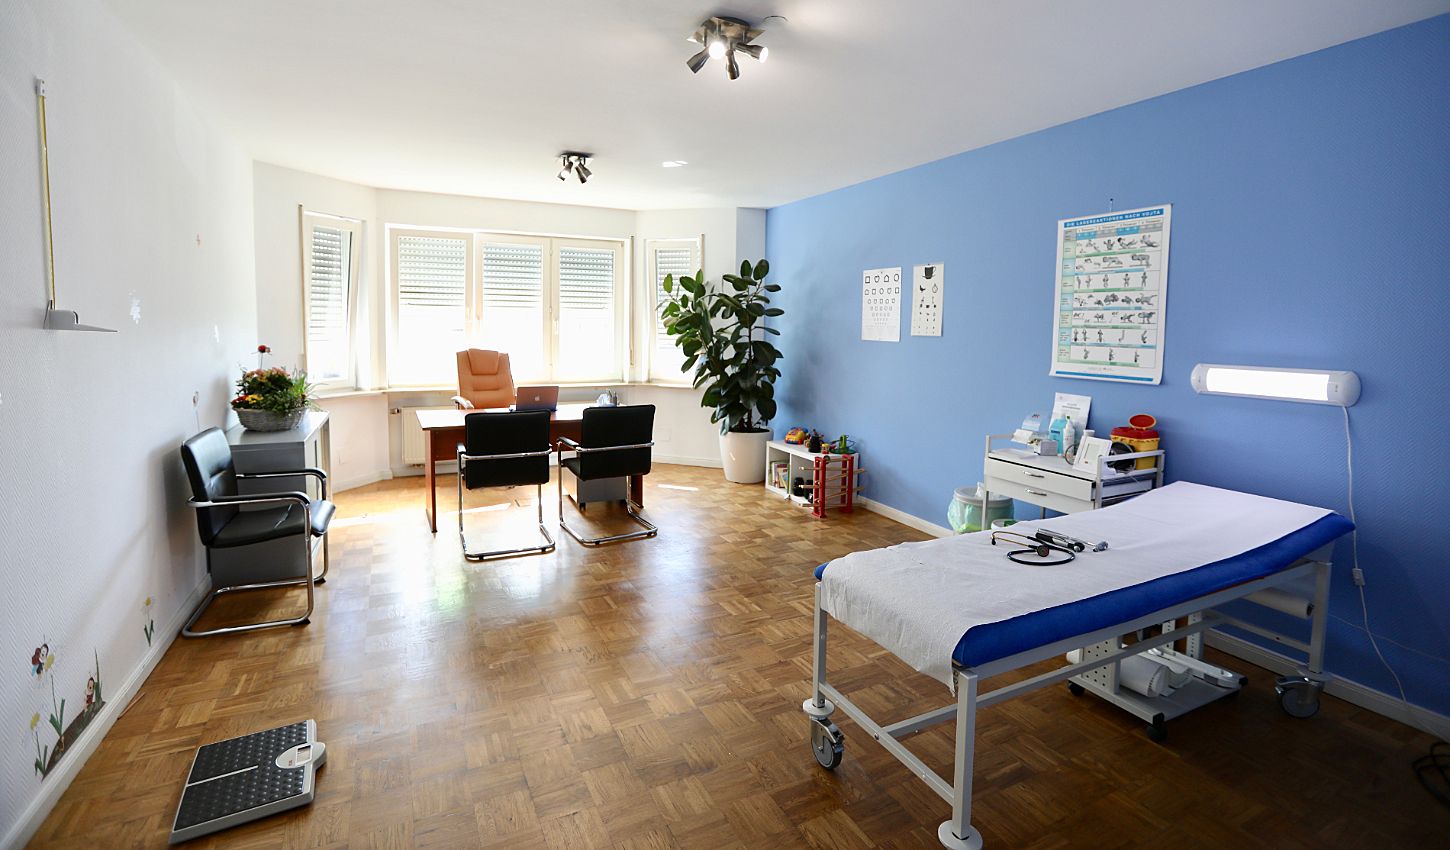 Pediatrician practice in Königstein